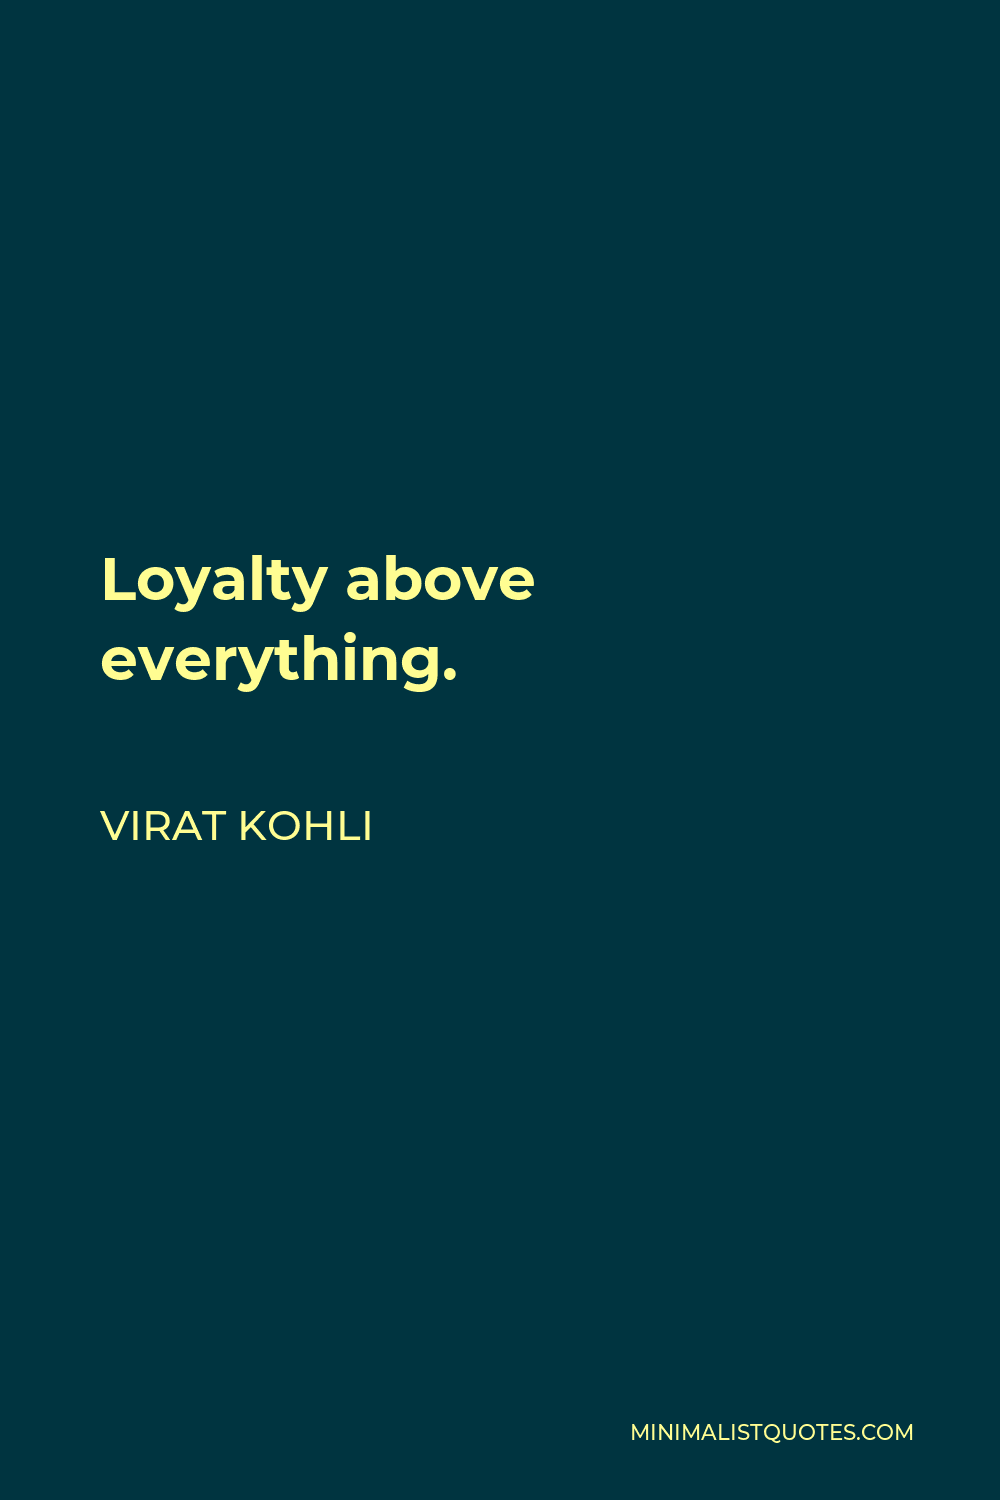 Virat Kohli Quote - Loyalty above everything.